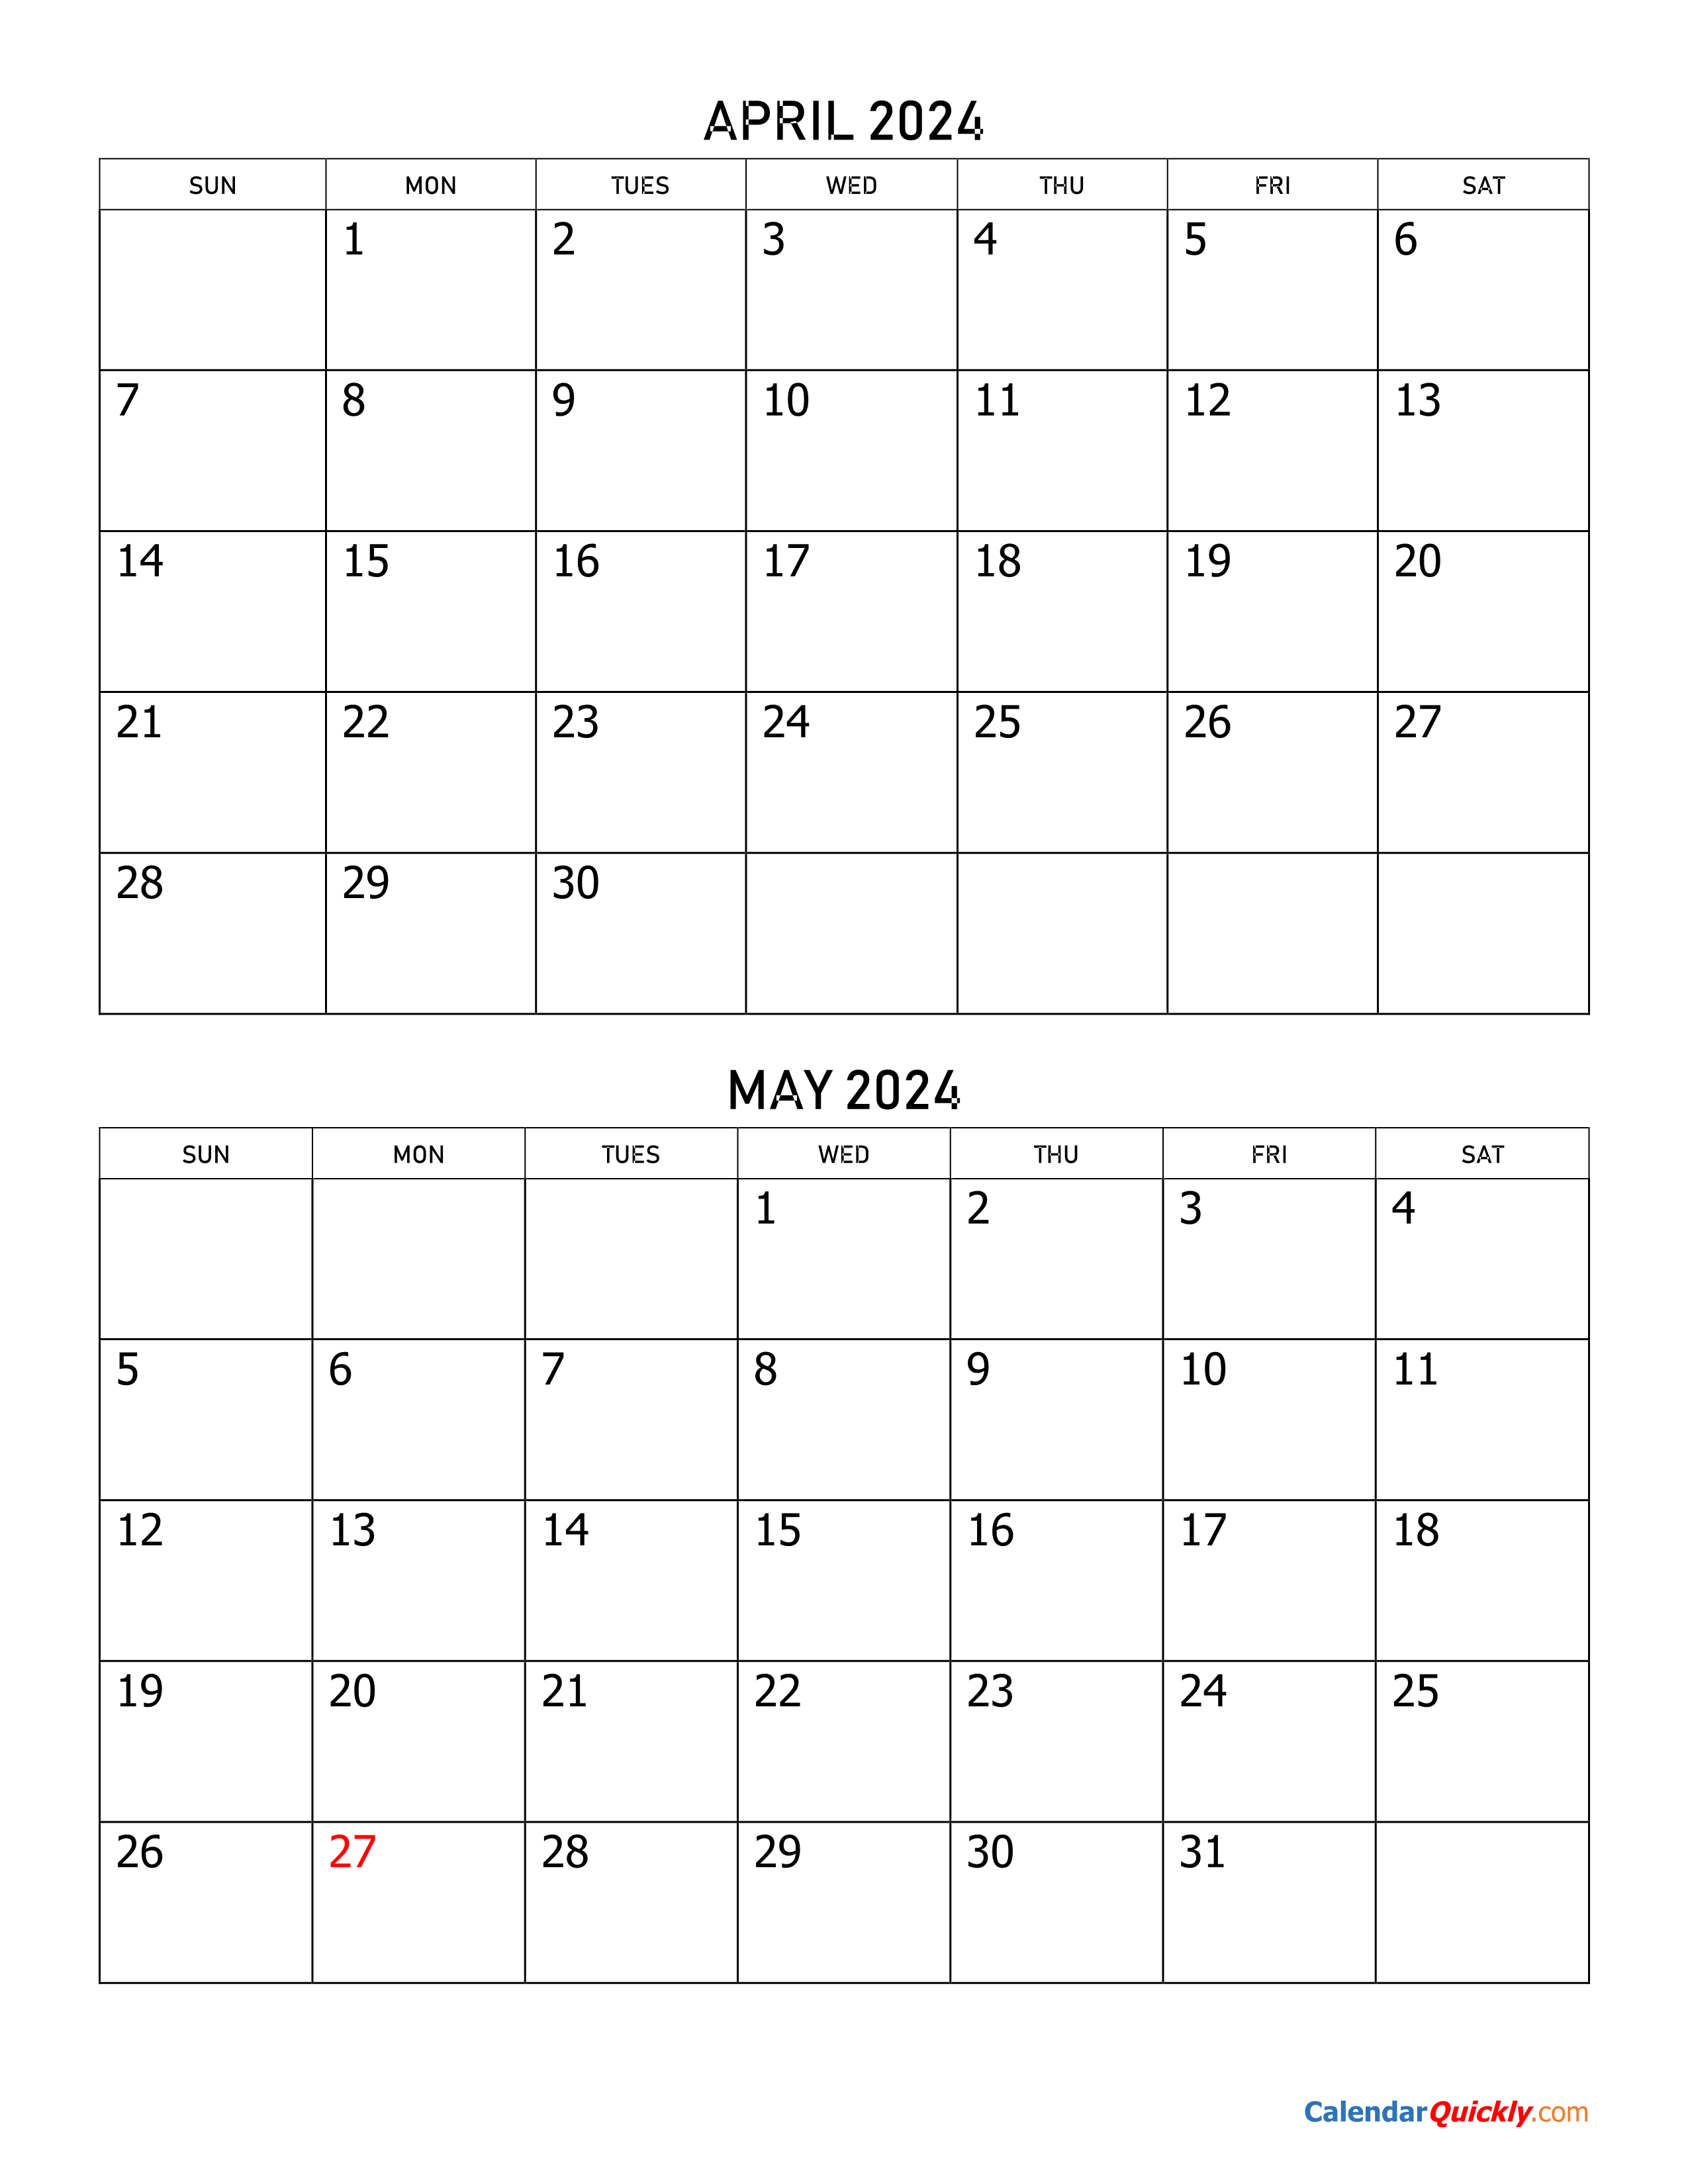 may-calendar-2024-printable-calendar-quickly-vrogue